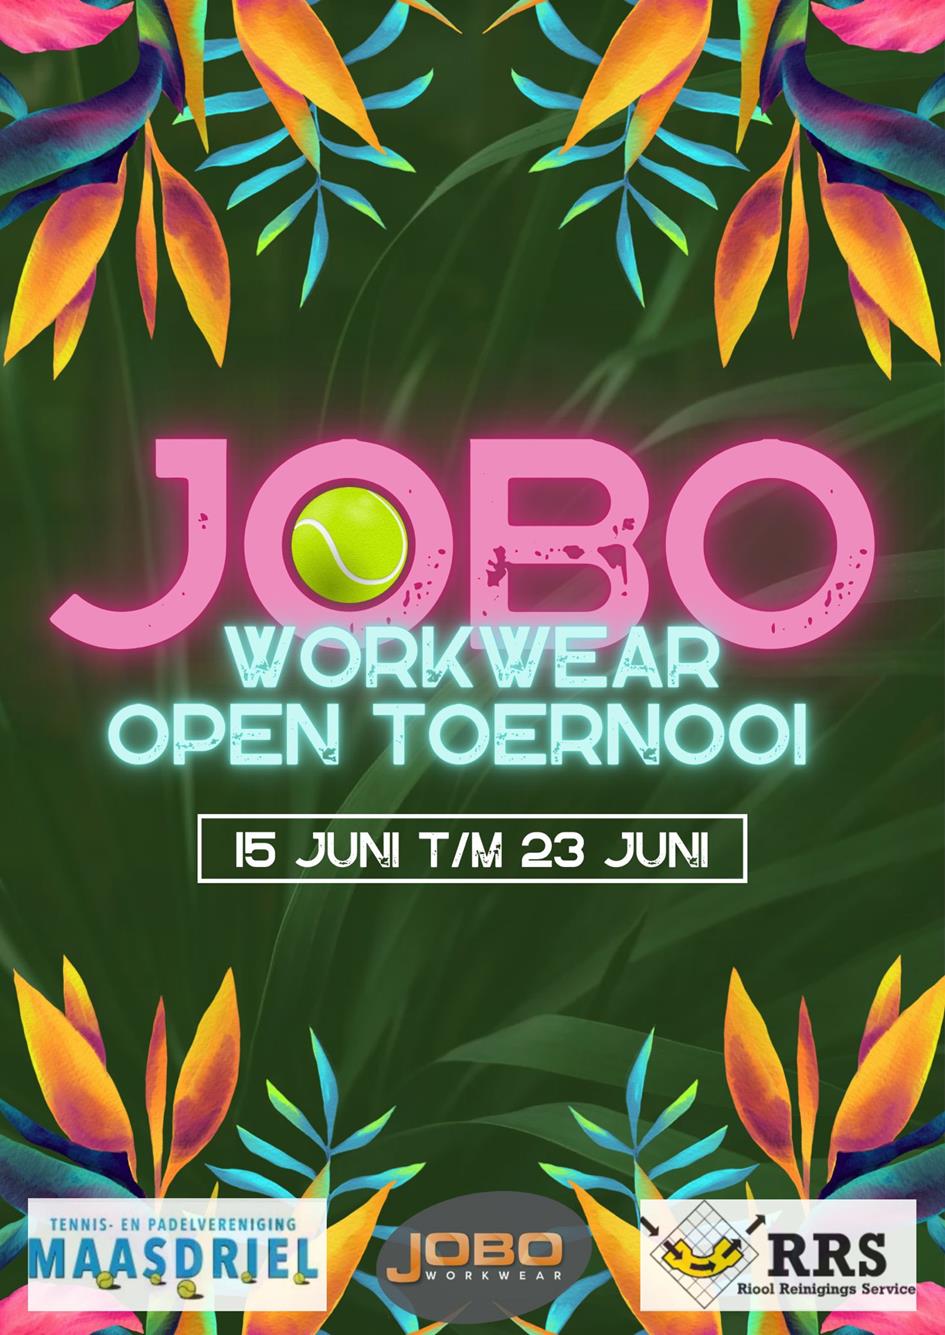 Jobo Workwear Open Toernooi.jpg